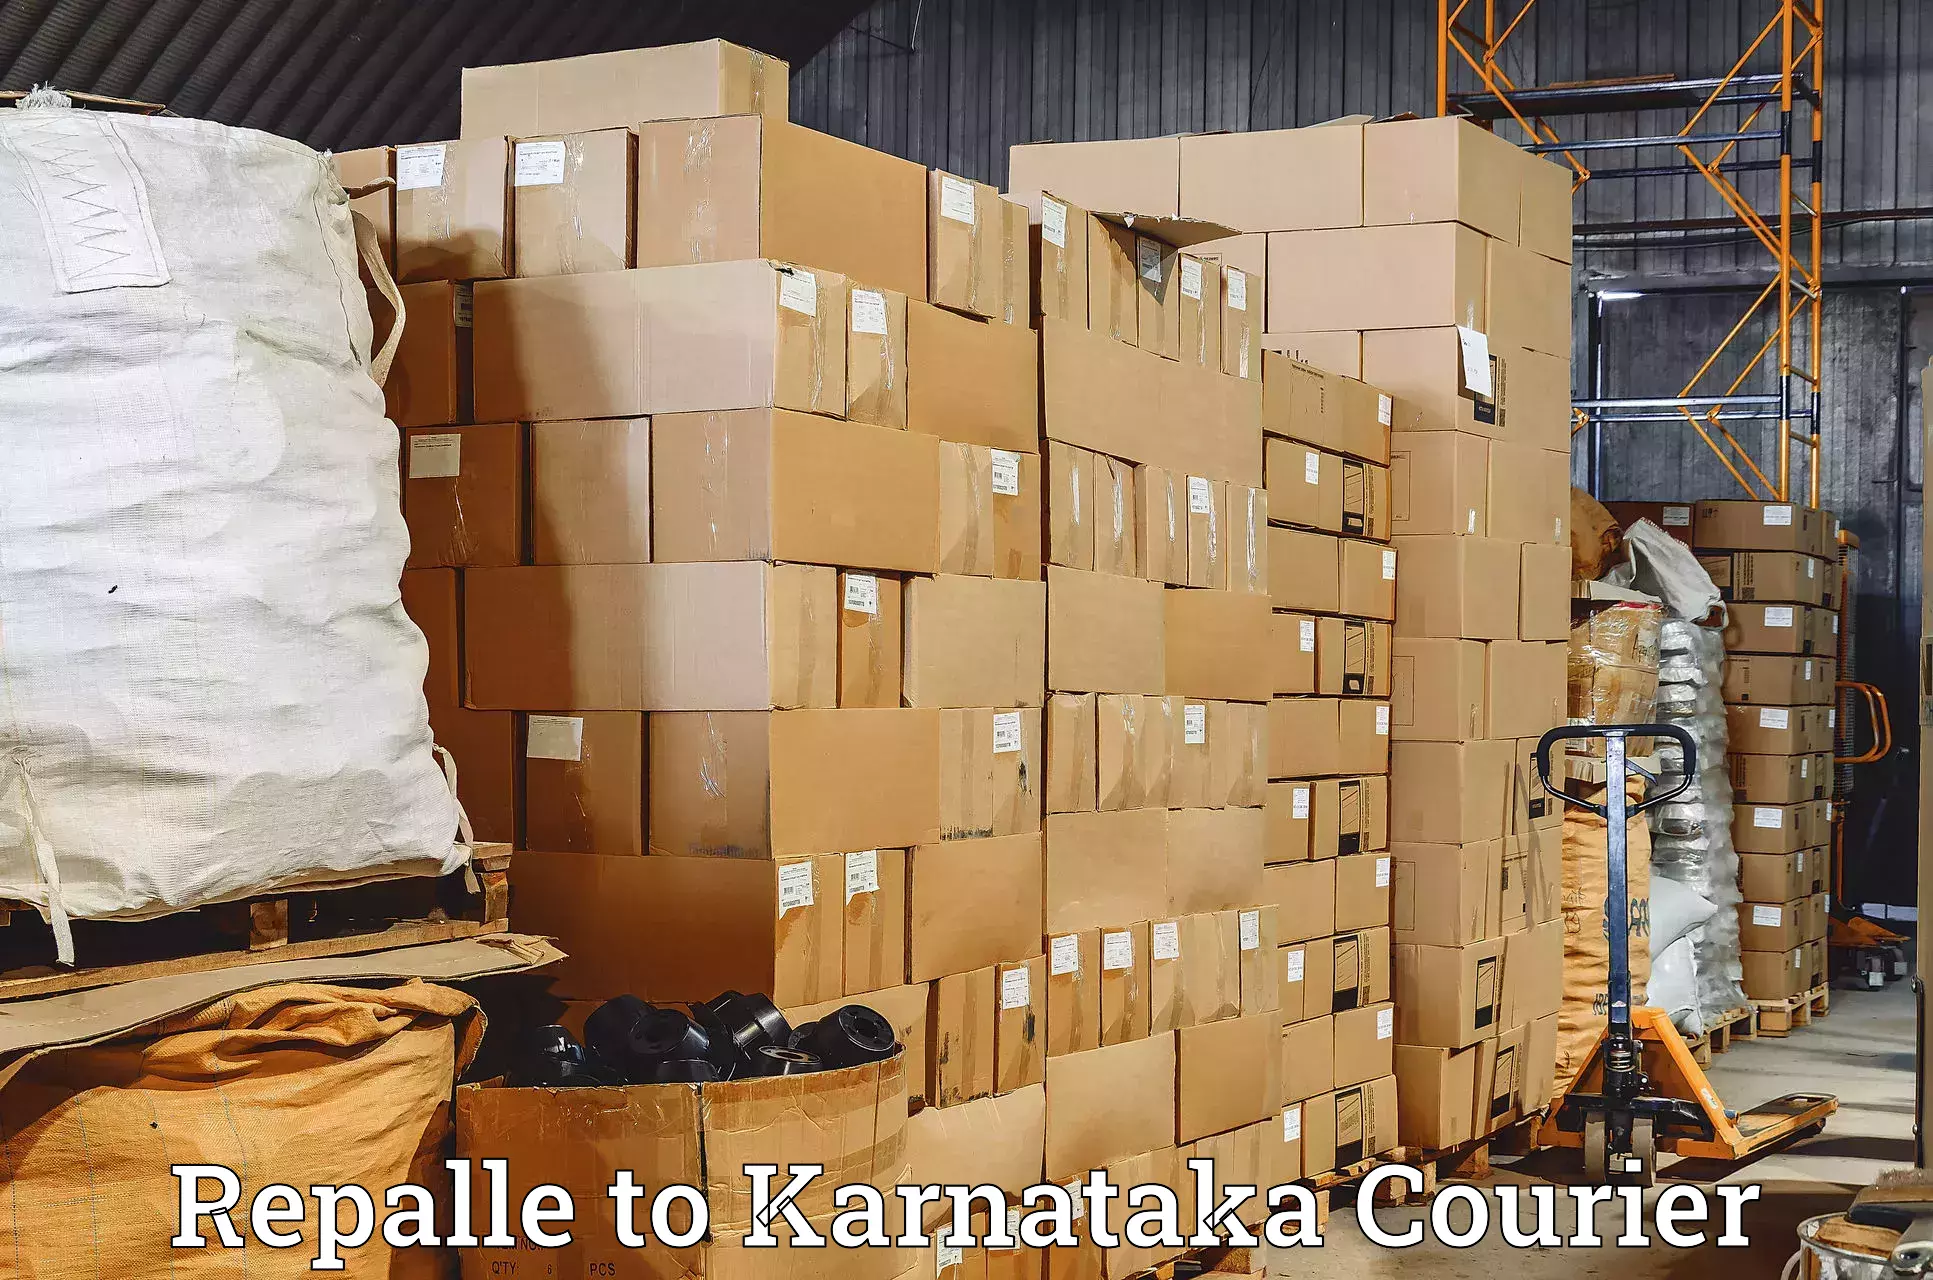 Courier service comparison Repalle to Karnataka